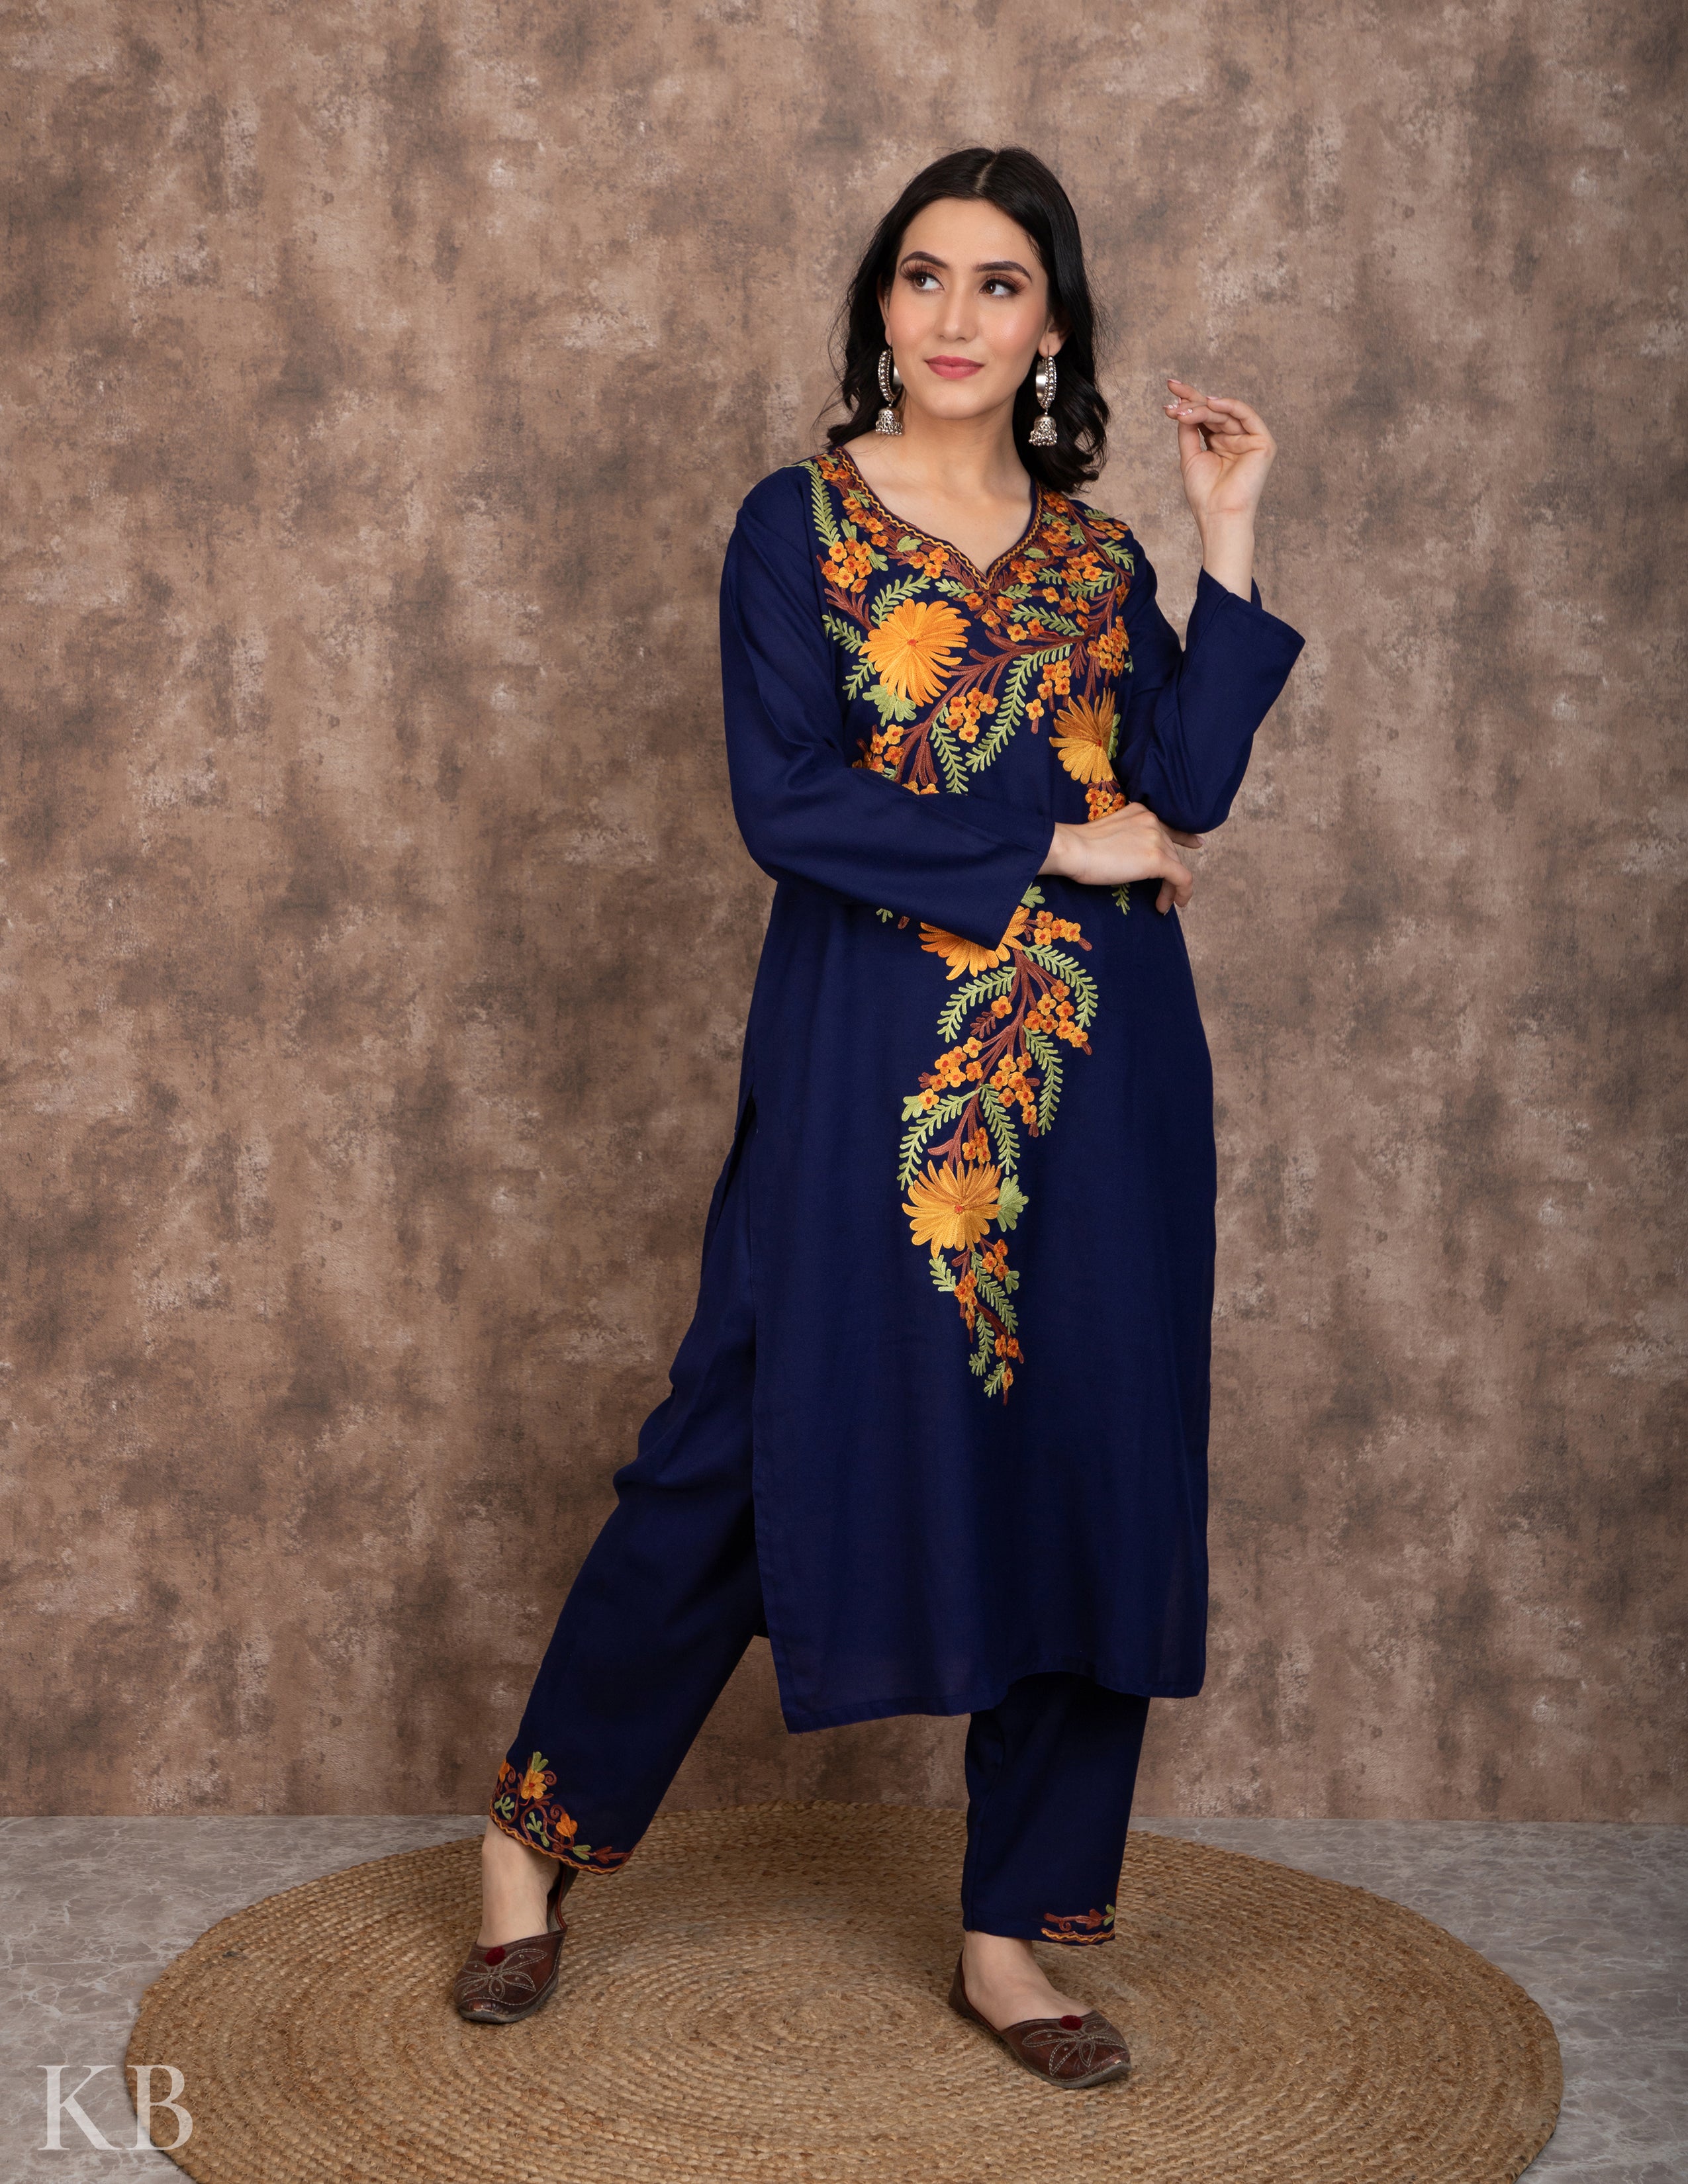 Beautiful pashmina kani suit new... - Cotton LAWN SUITS | Facebook